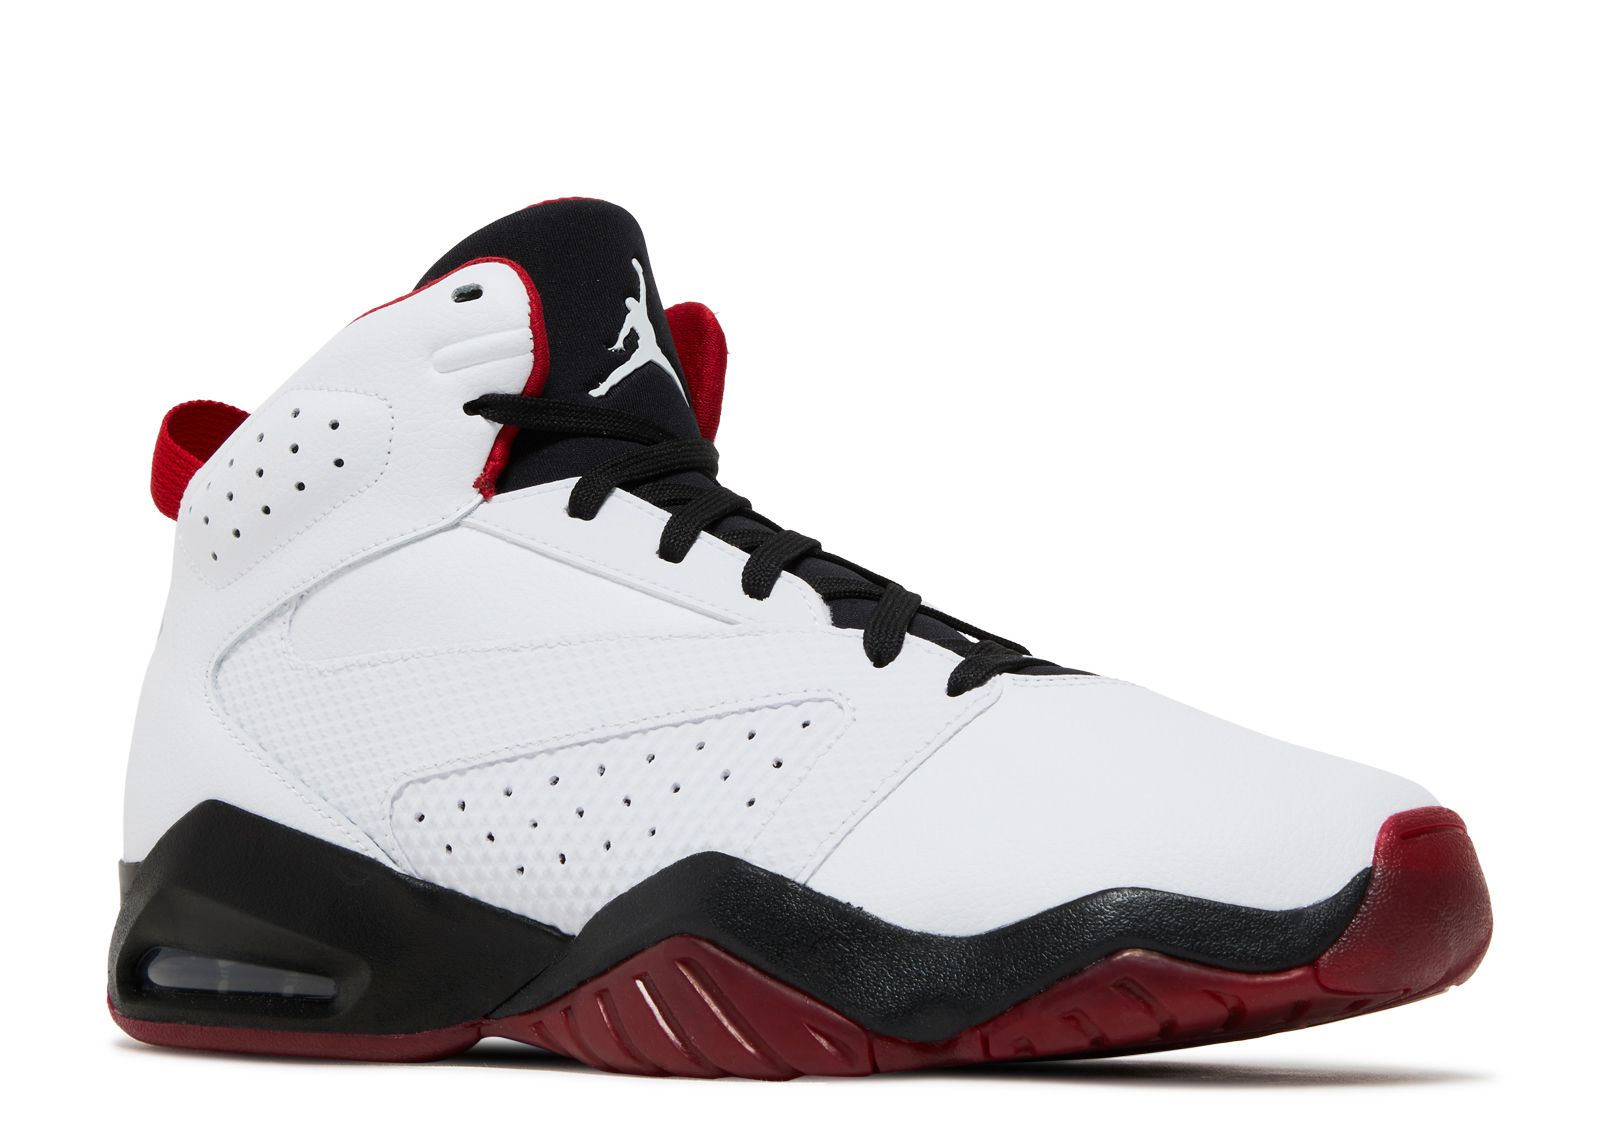  Jordan AR4430-106: Mens Lift Off White/Black-Red Basketball  Sneakers (7.5 D(M) US Men)